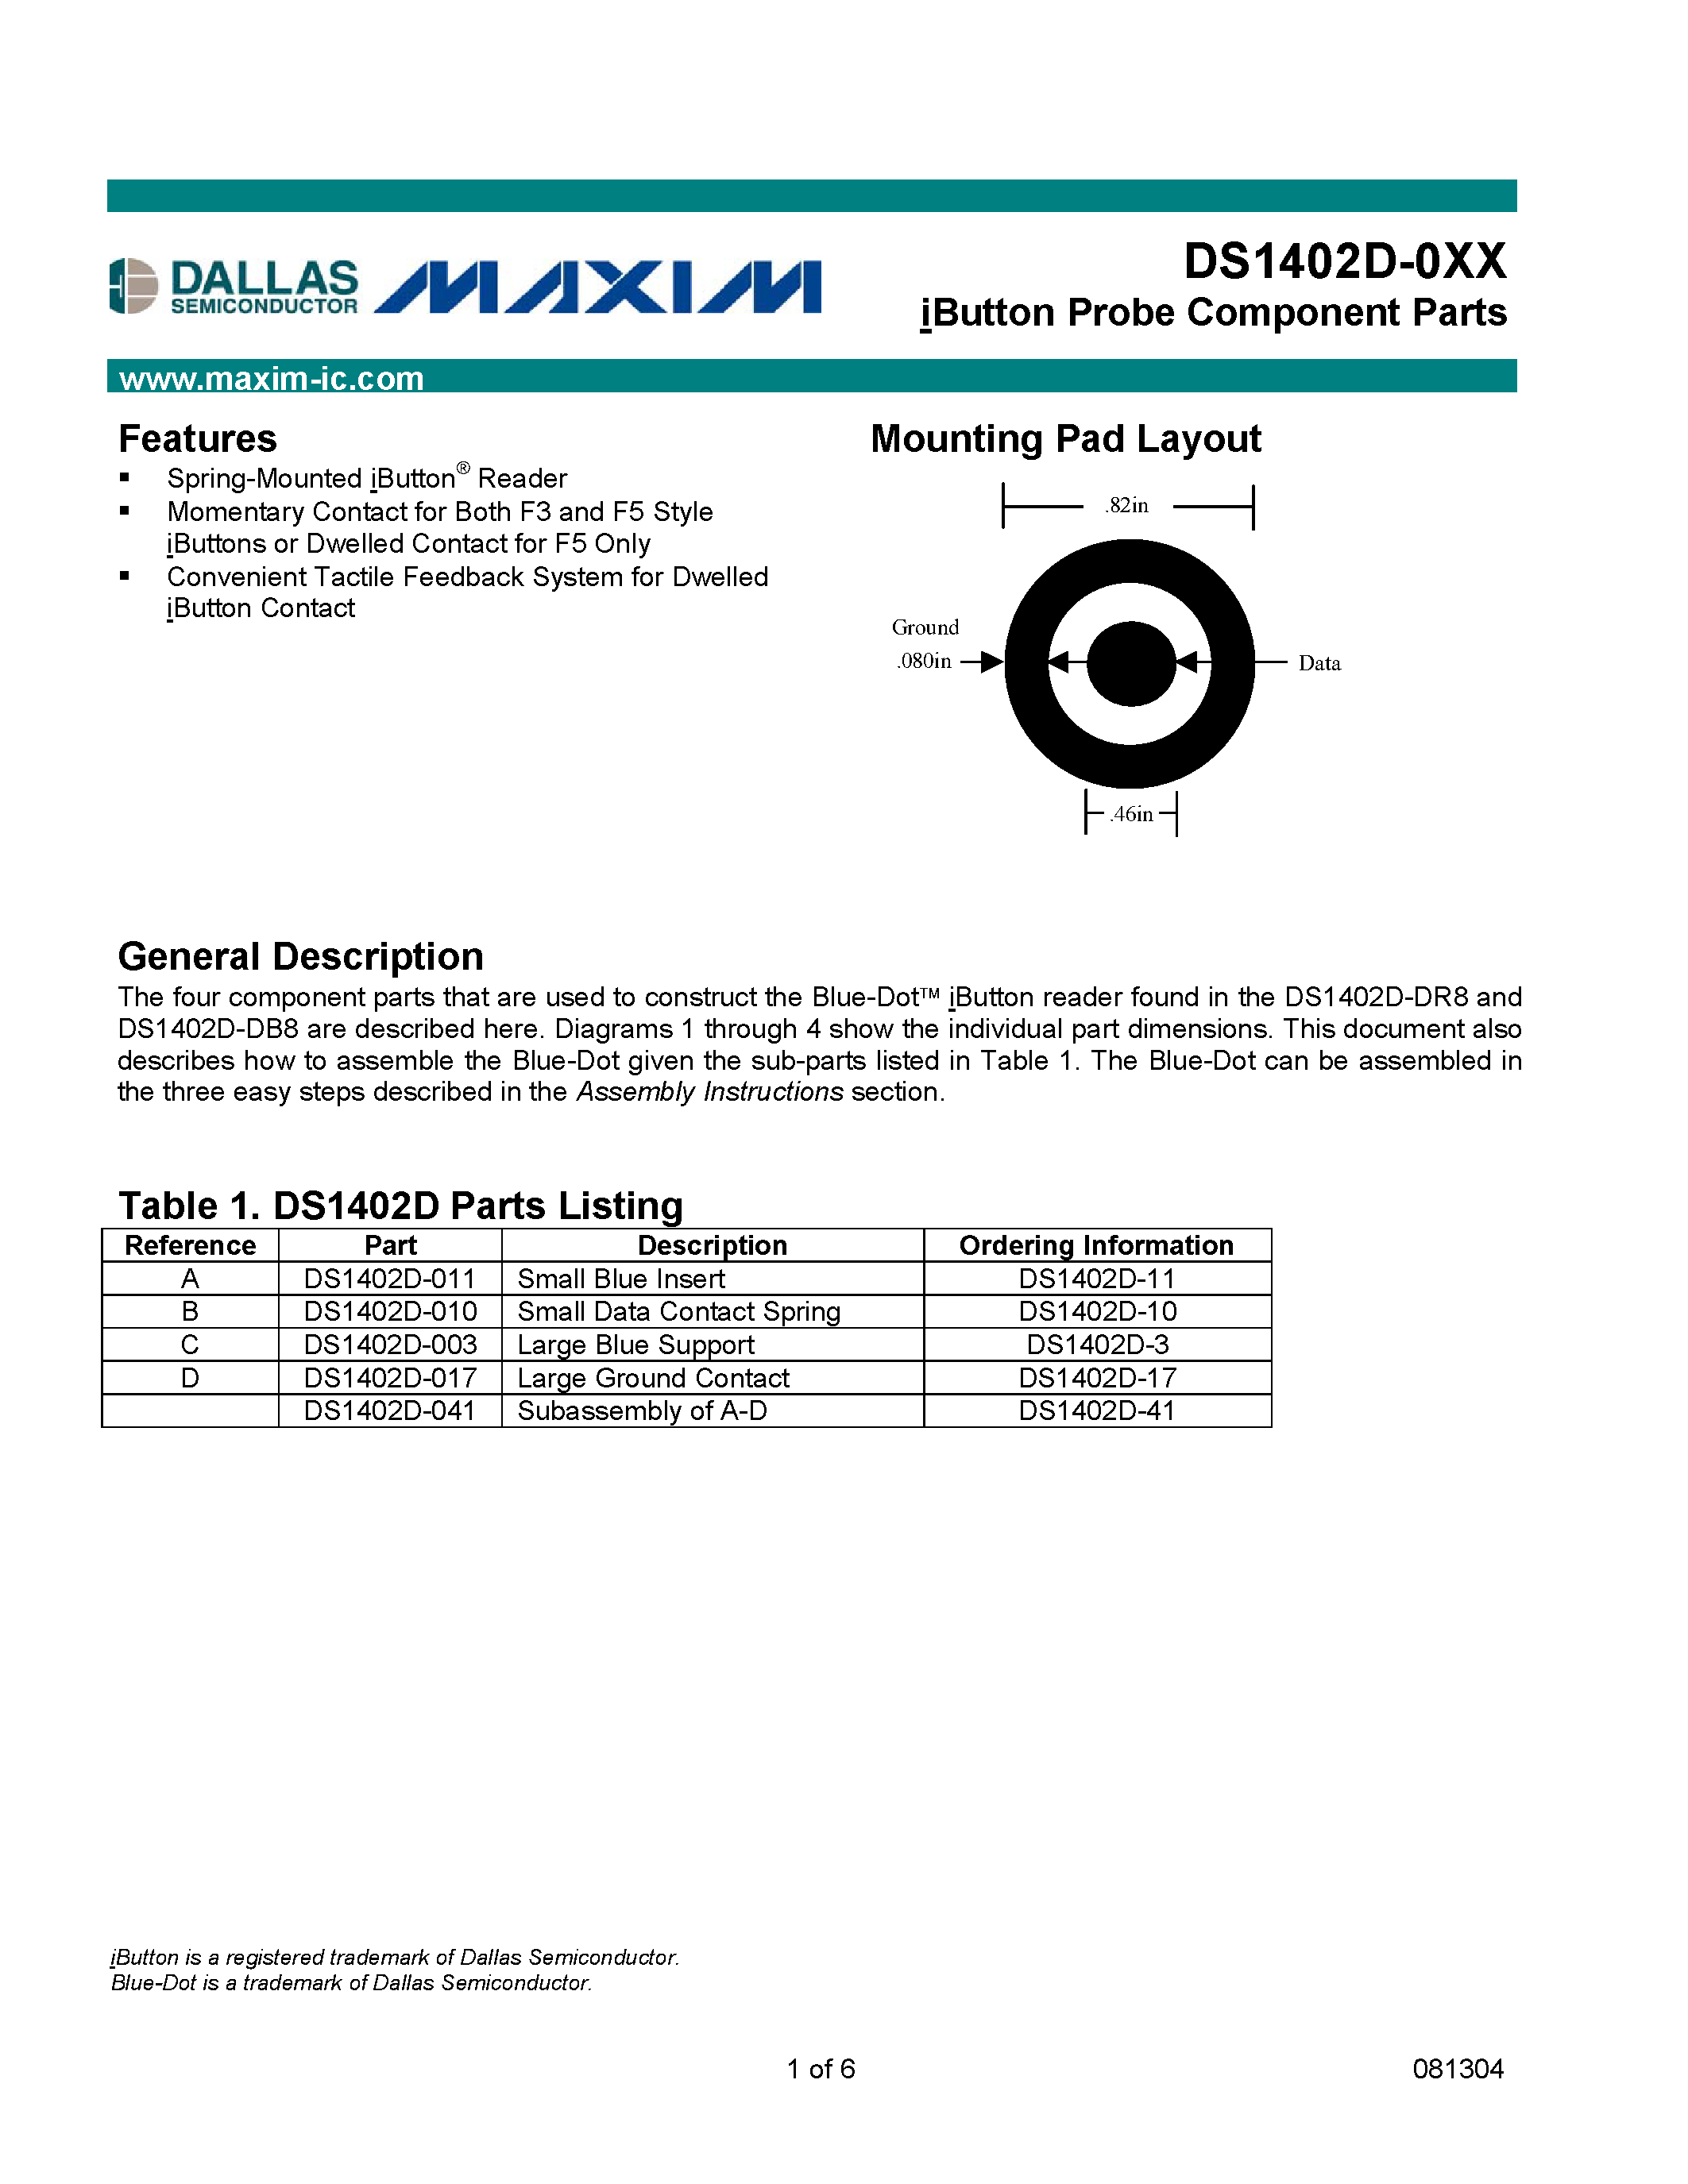 Datasheet DS1402D-41 - iButton Probe Component Parts page 1